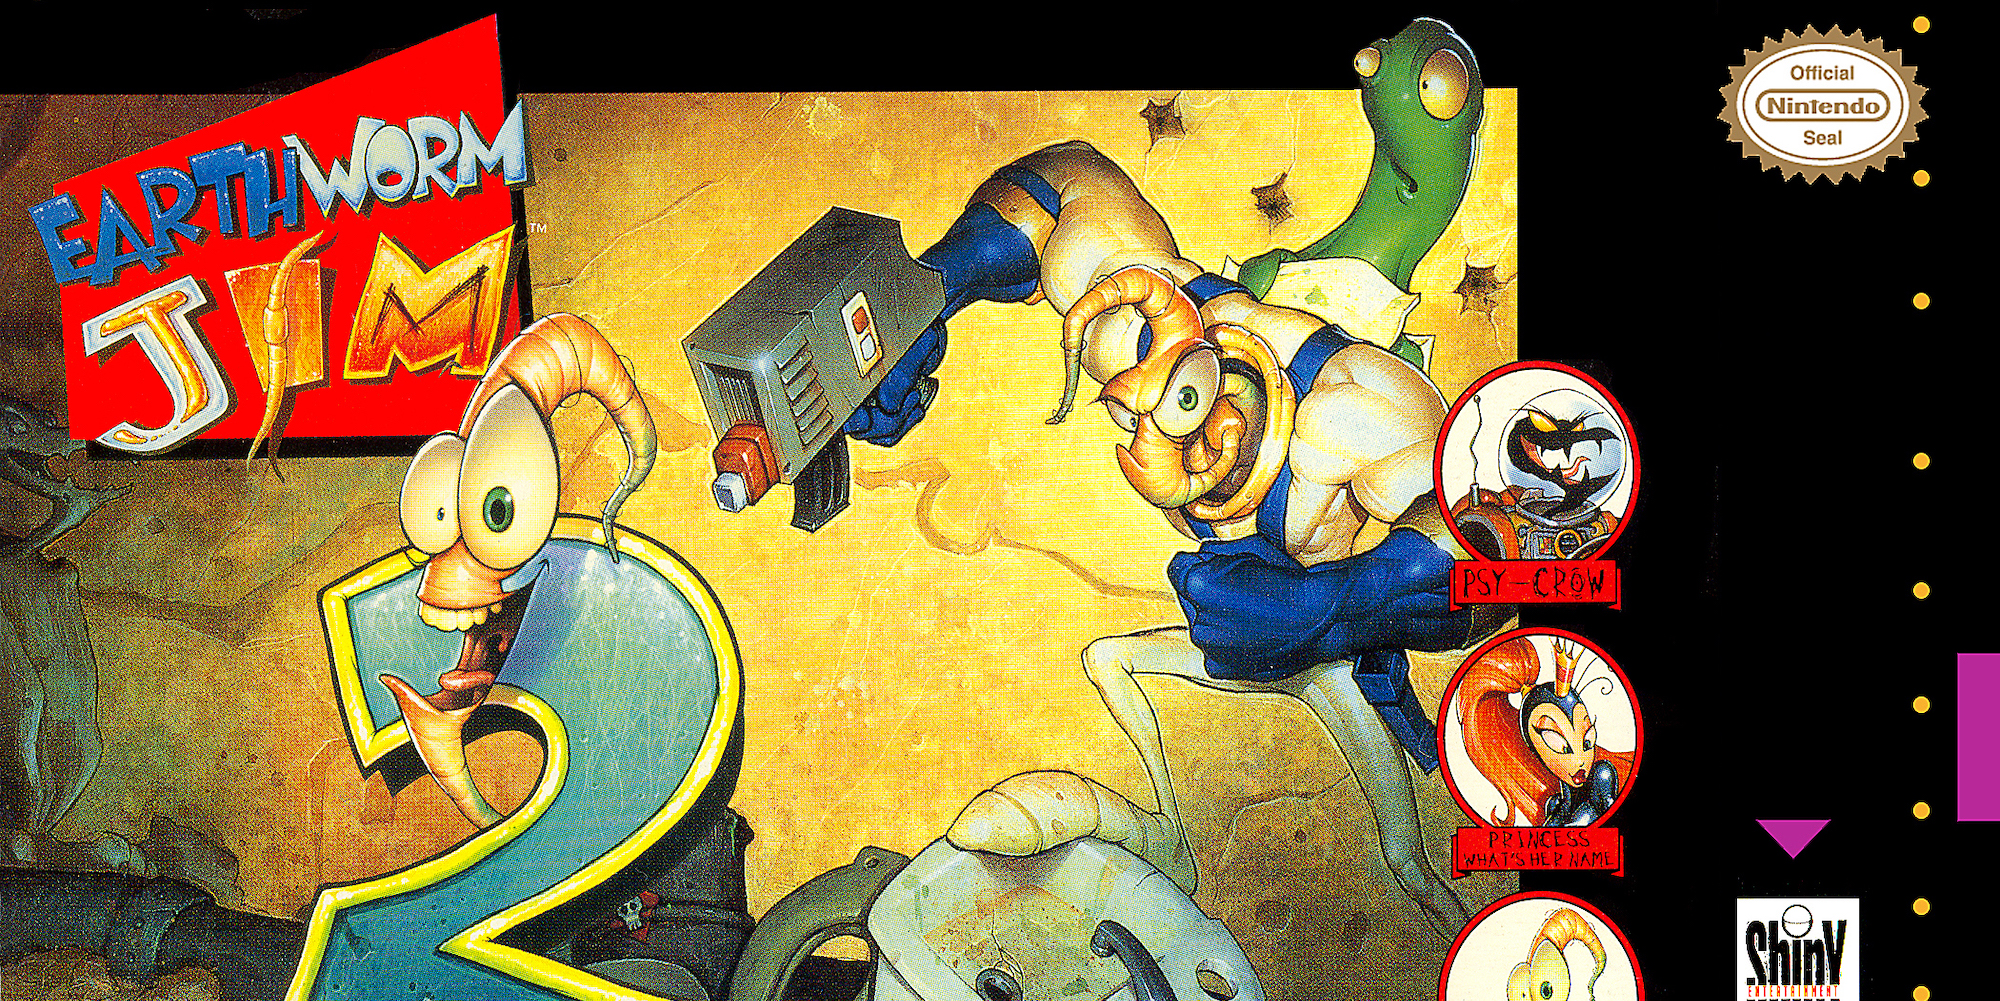 Earthworm Jim 2, Dig Dug II, and Mappy-Land Nintendo Switch Online gameplay